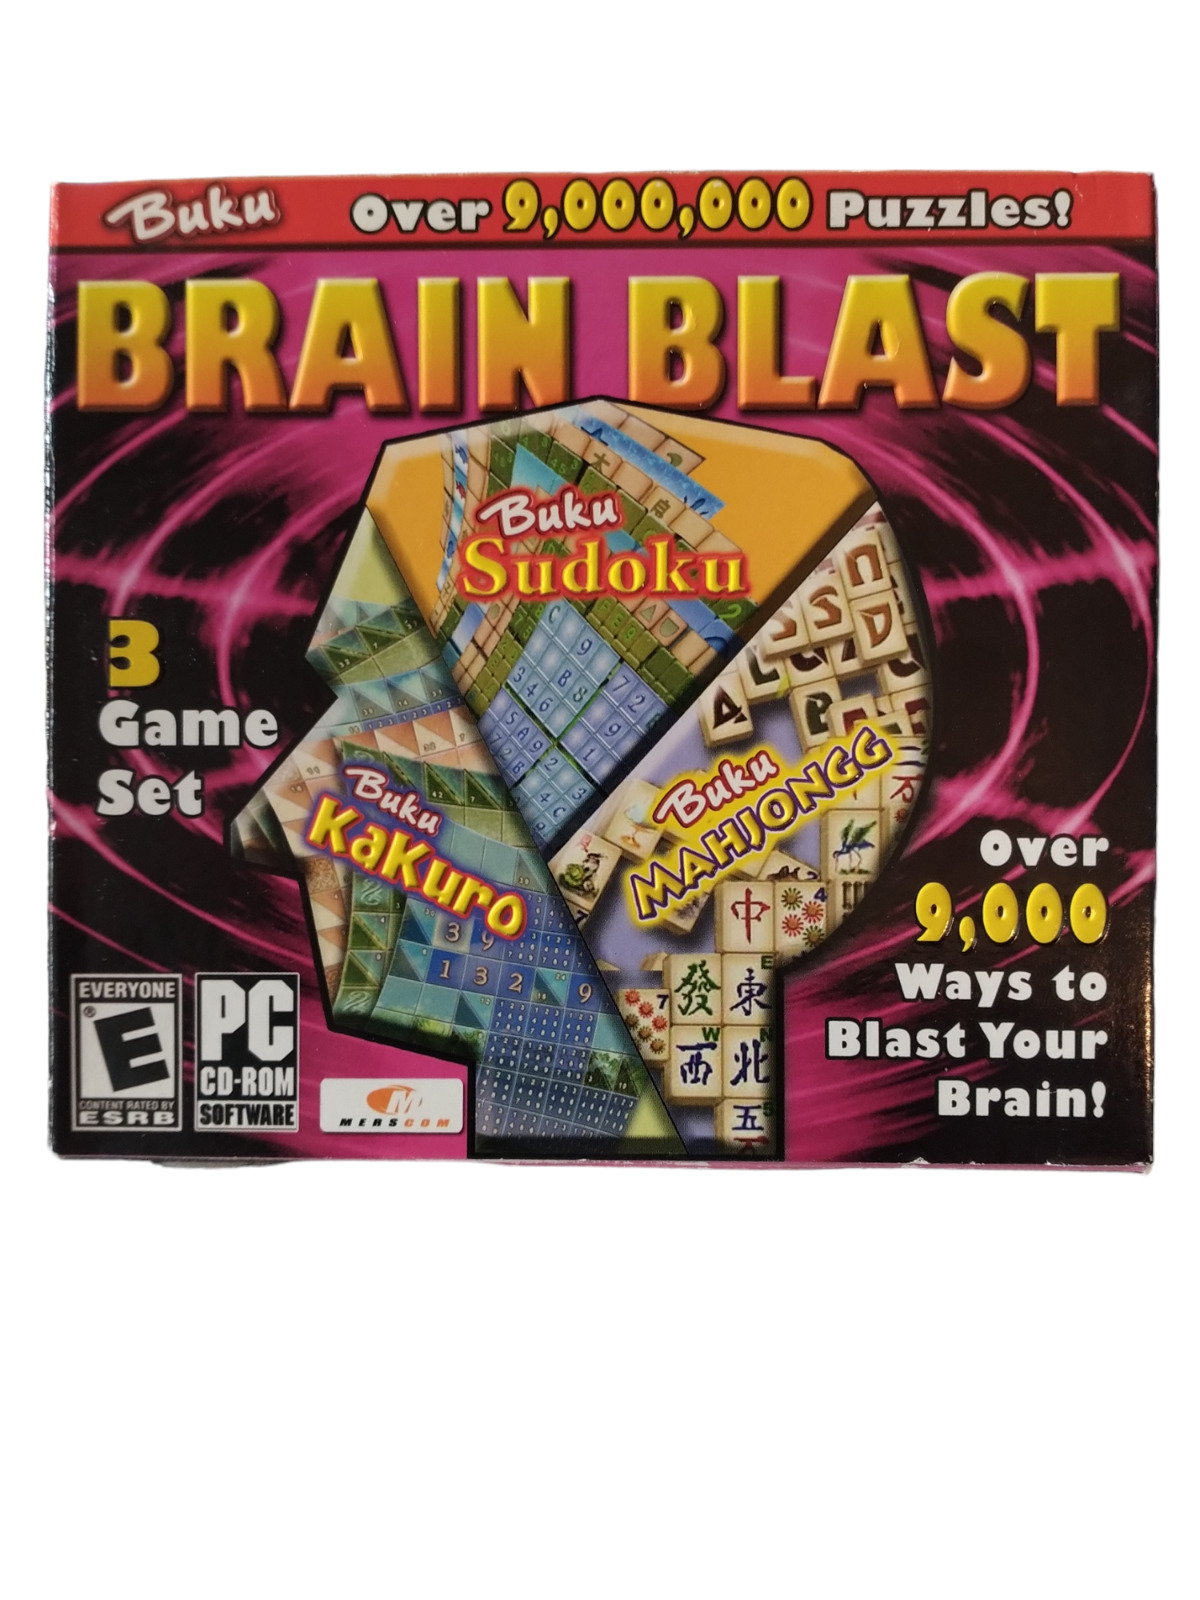 Brain Blast Buku - 3 Games Sudoku, Kakuro, & Mahjongg. PC CD ROM  Windows